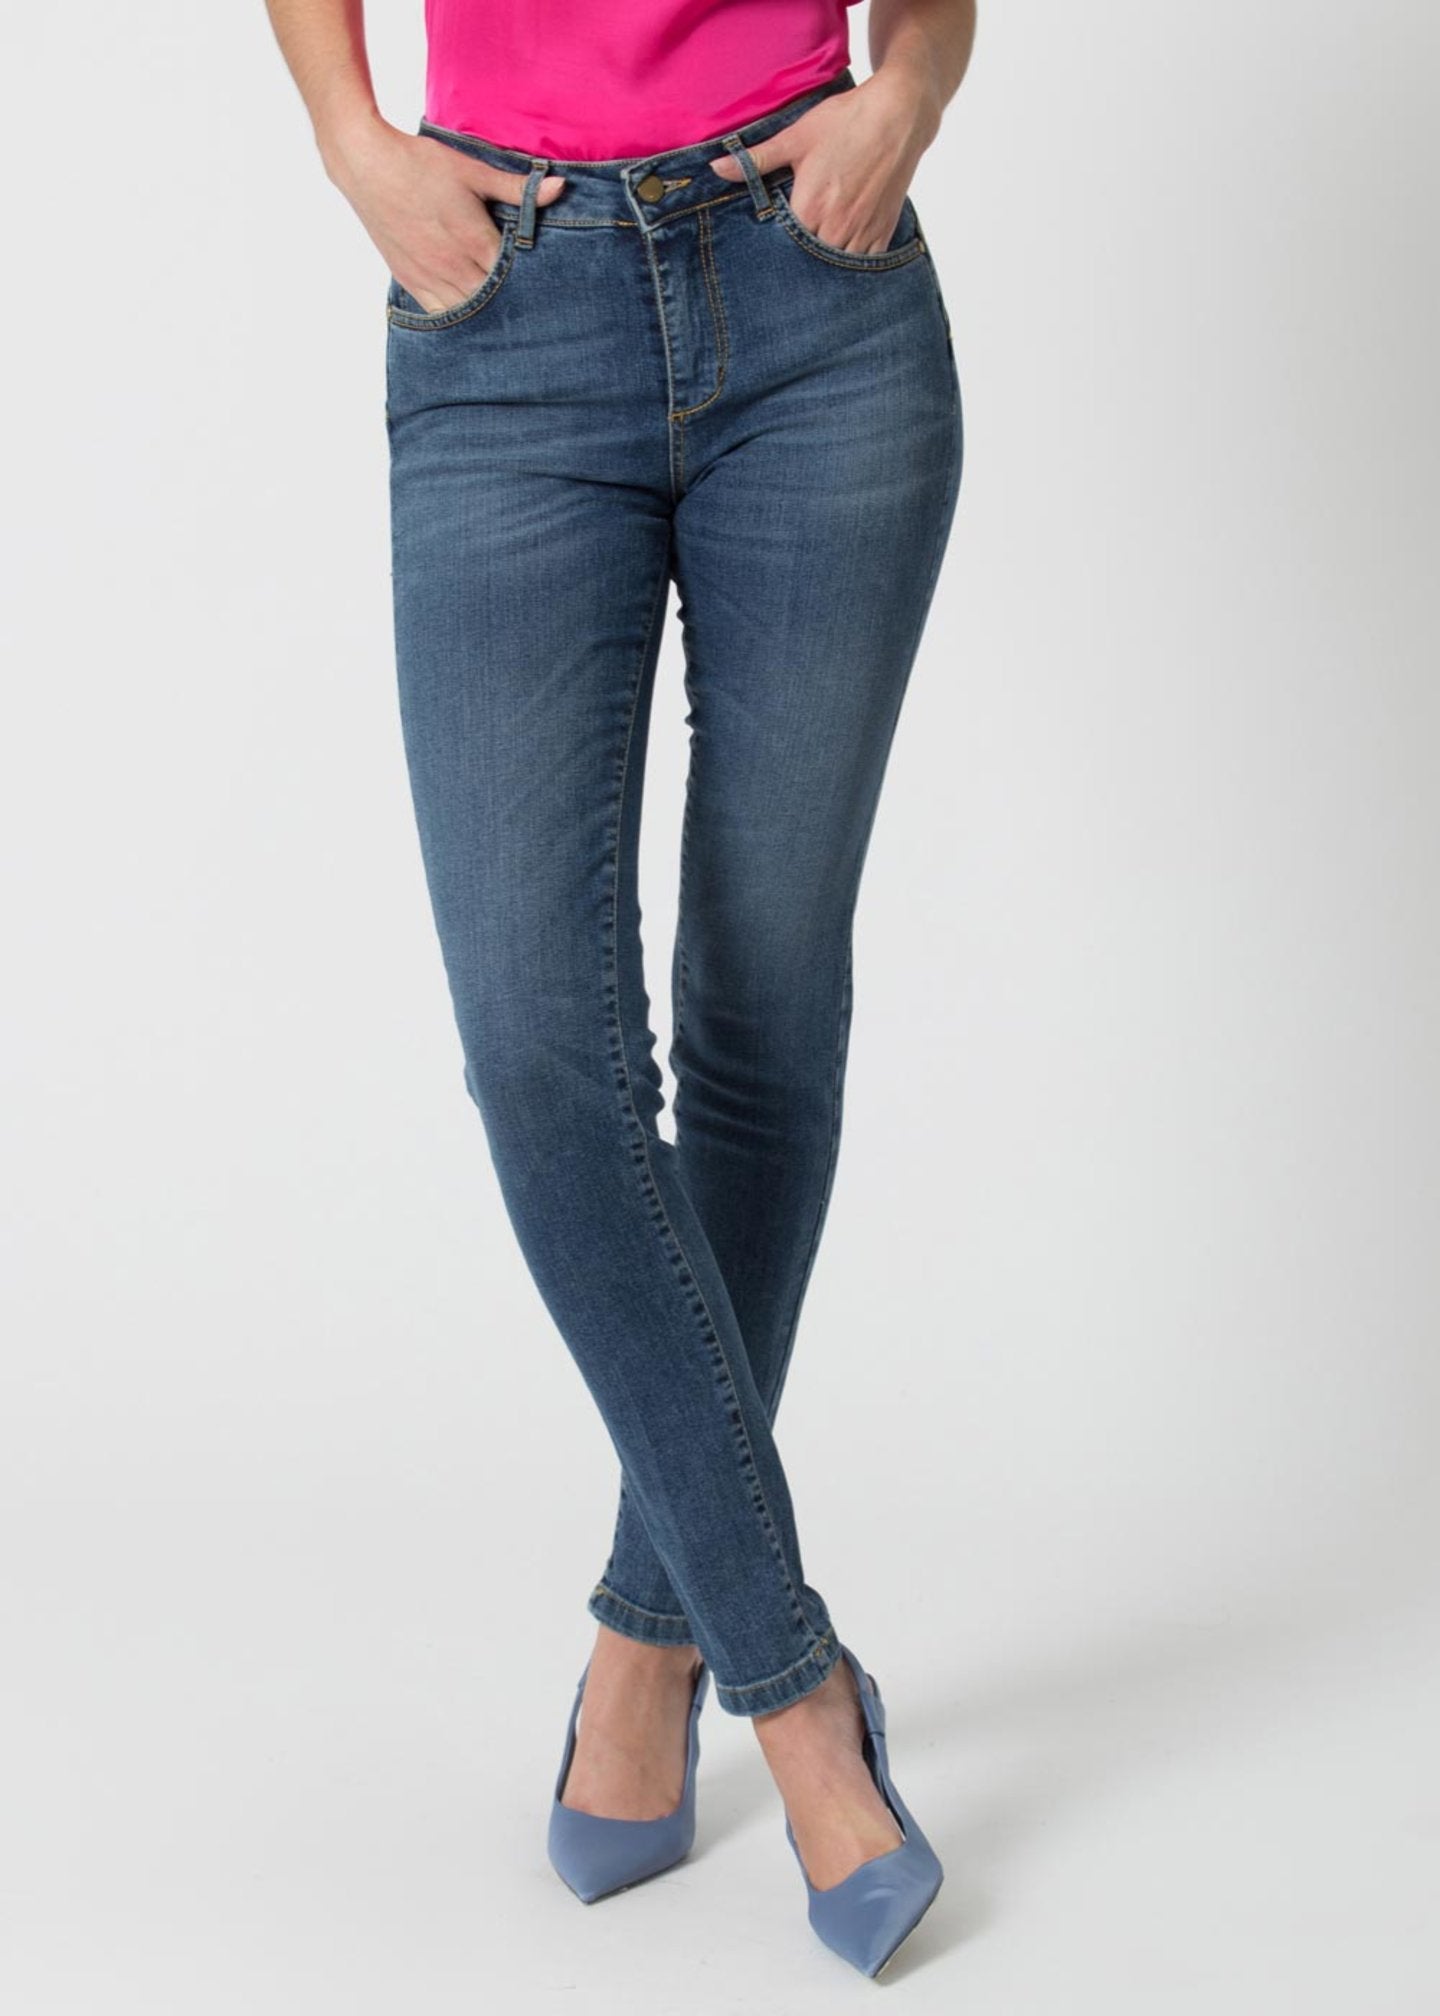 Jeans Kocca Skinny Fit / Jeans - Ideal Moda